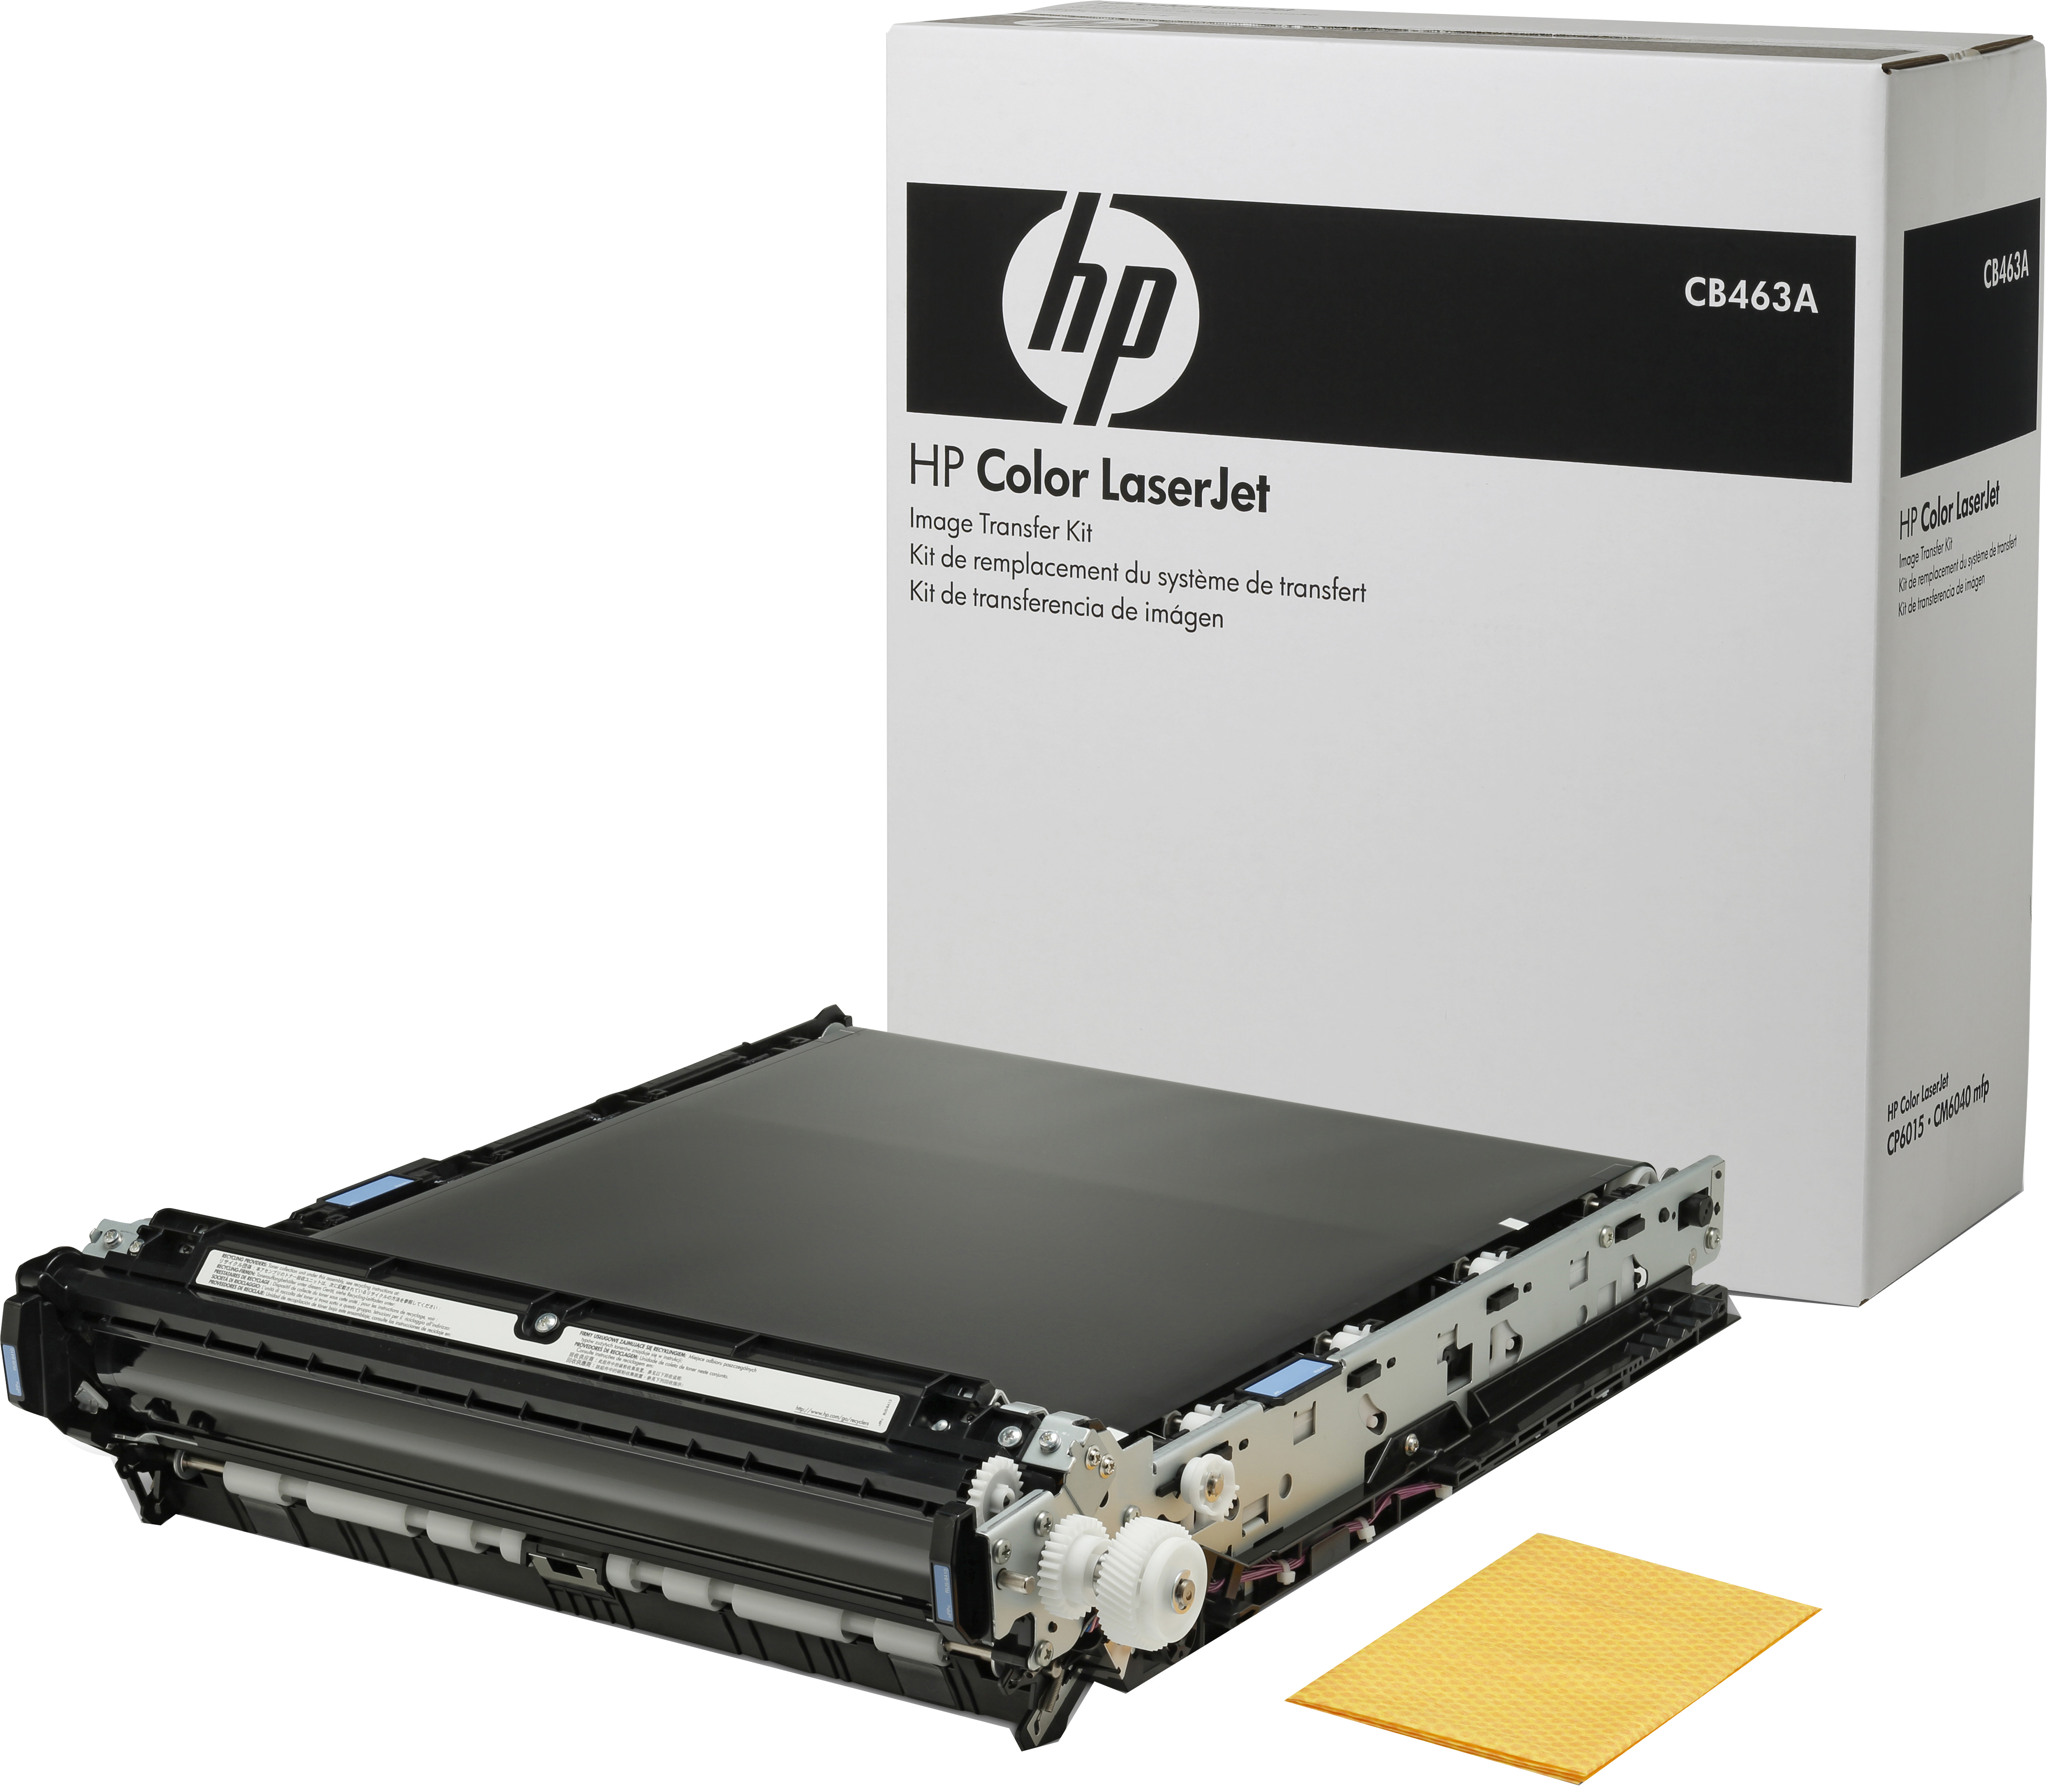 Bild von HP Color LaserJet Image Transfer Kit - Transfereinheit - USB